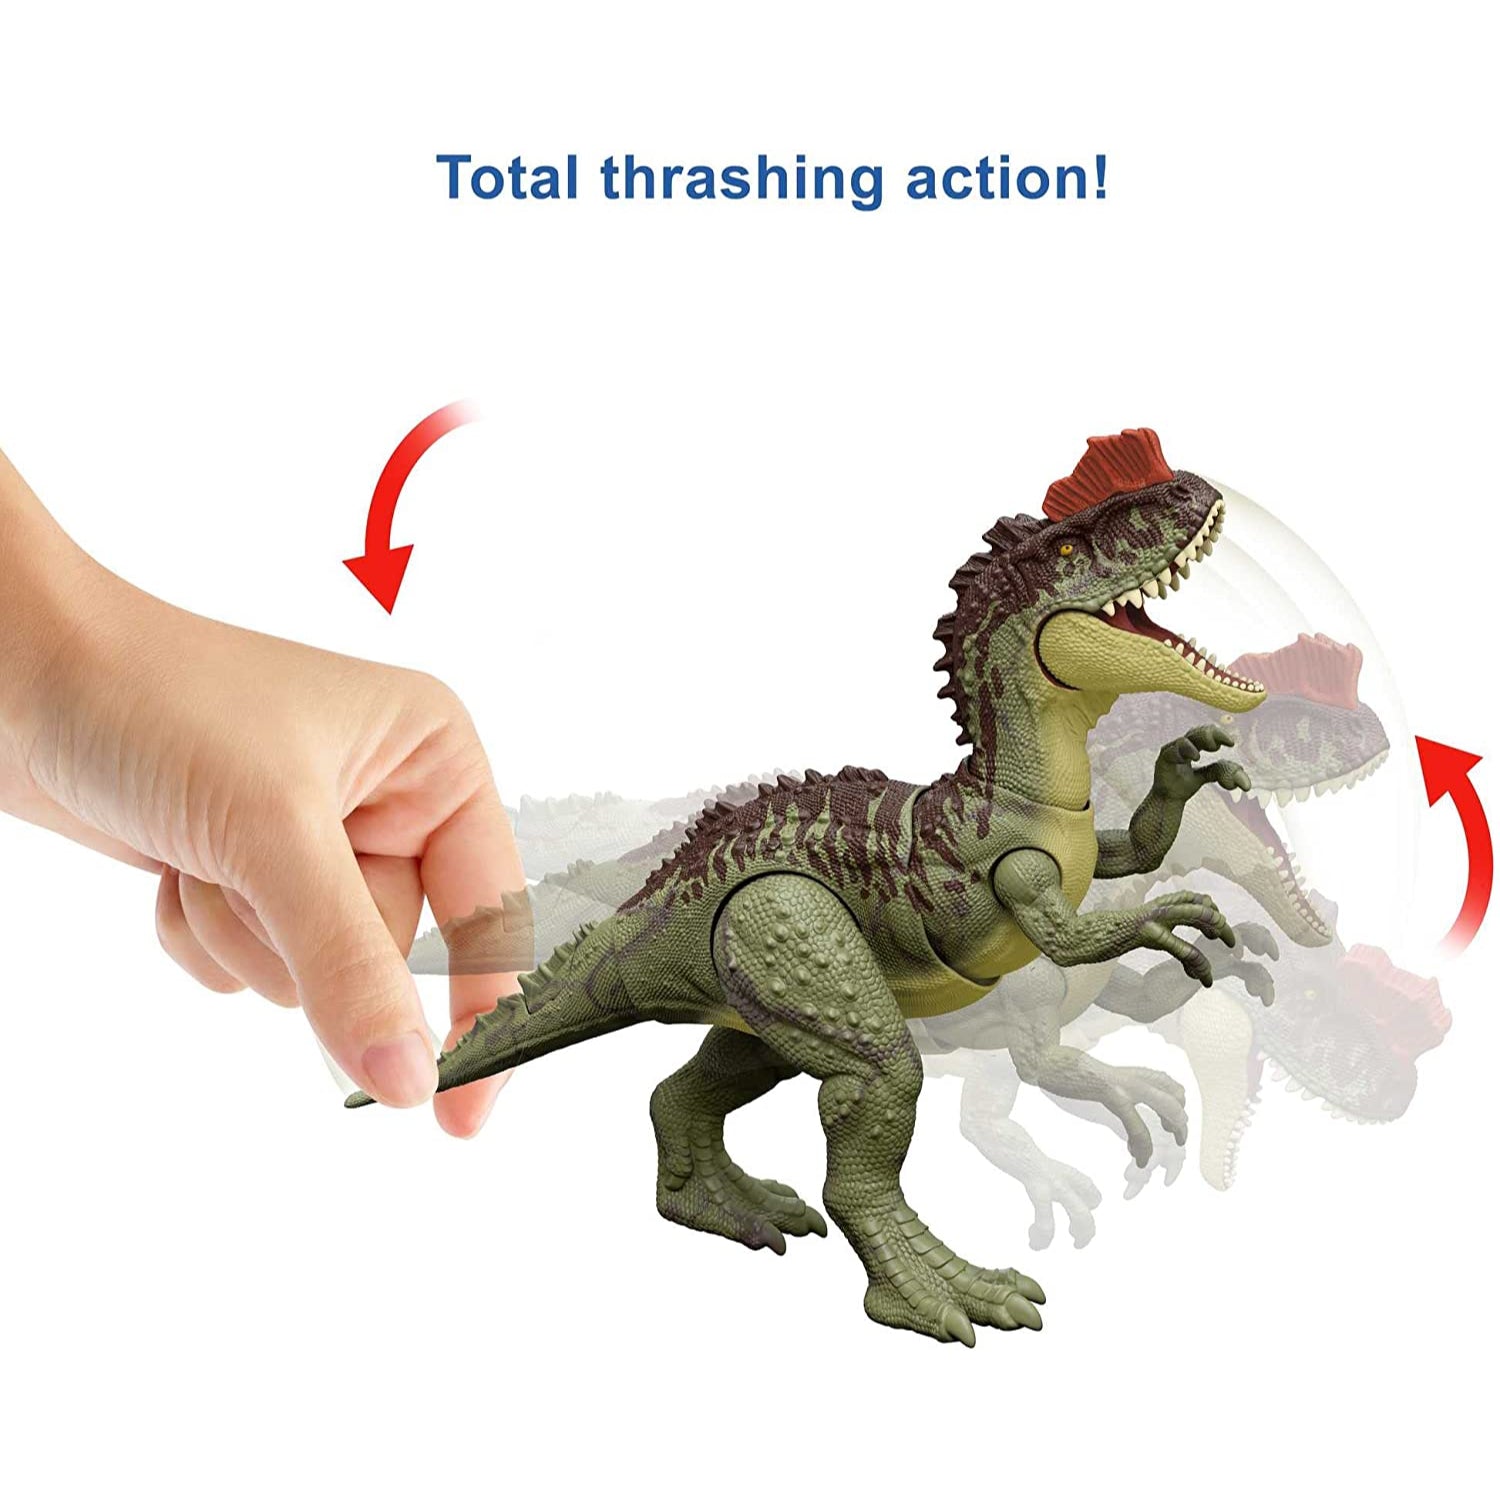 Mattel Jurassic World Dominion Massive Action Yangchuanosaurus Dinosaur Figure with Attack Movement